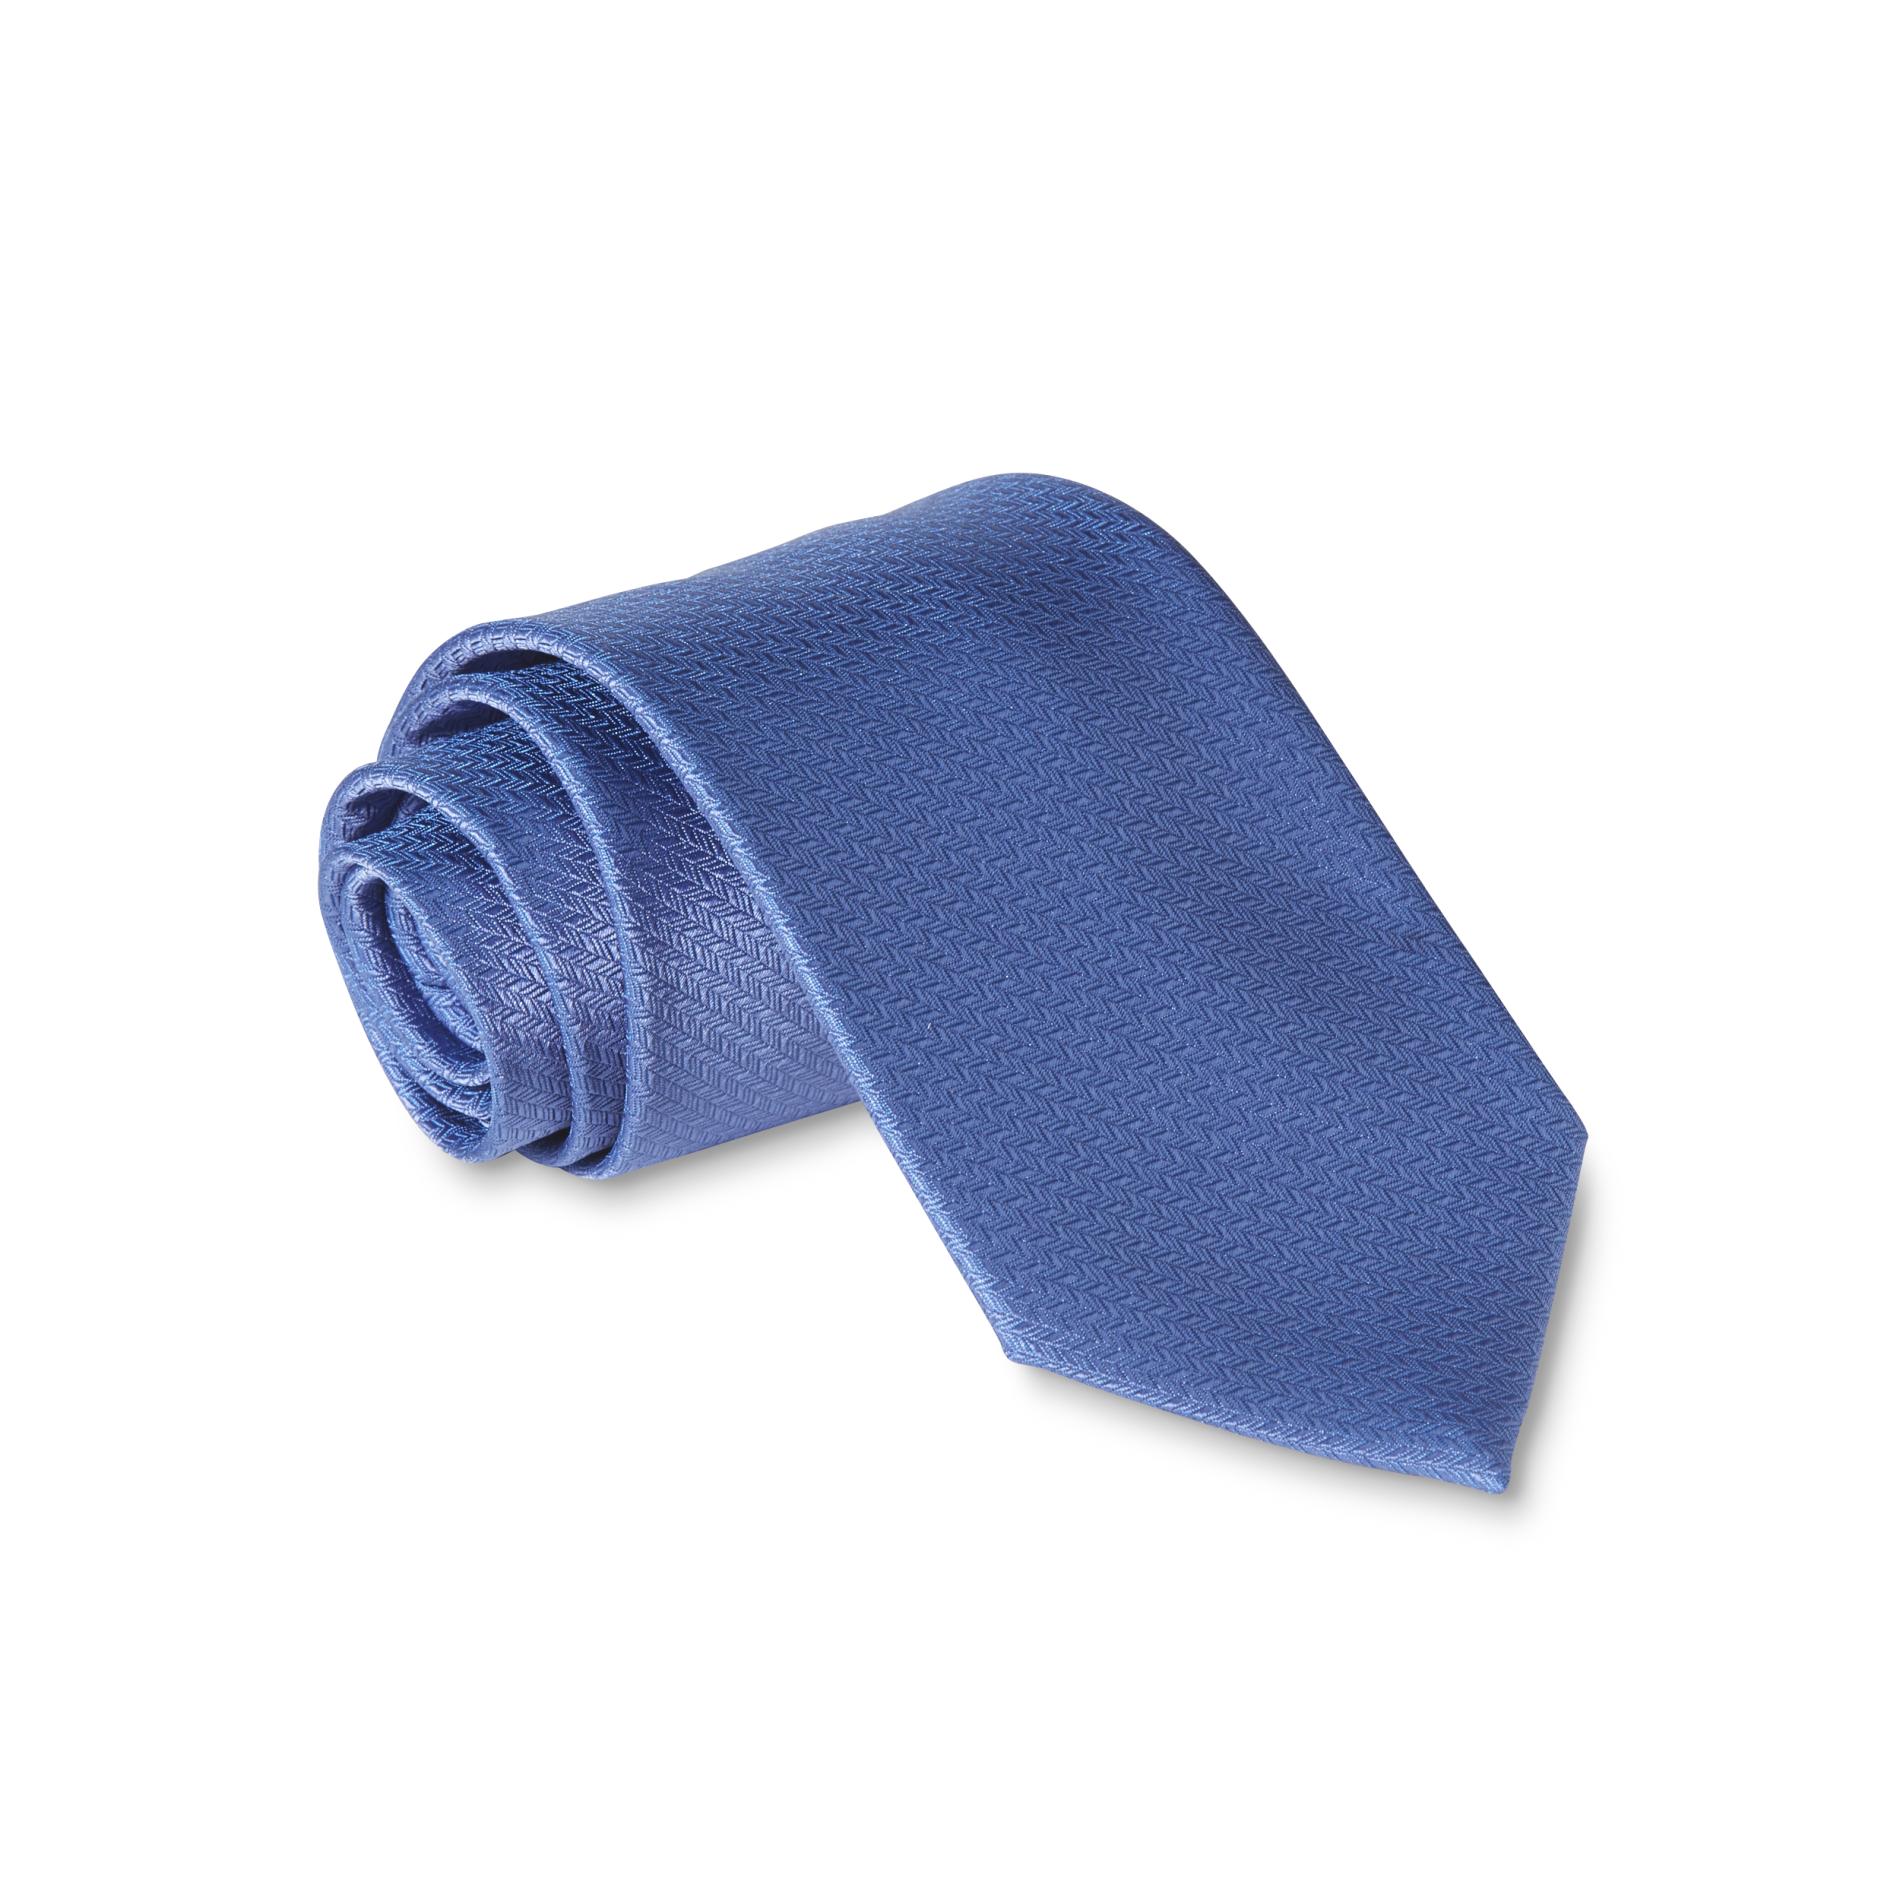 David Taylor Collection Men's Necktie - Geometric Embossed